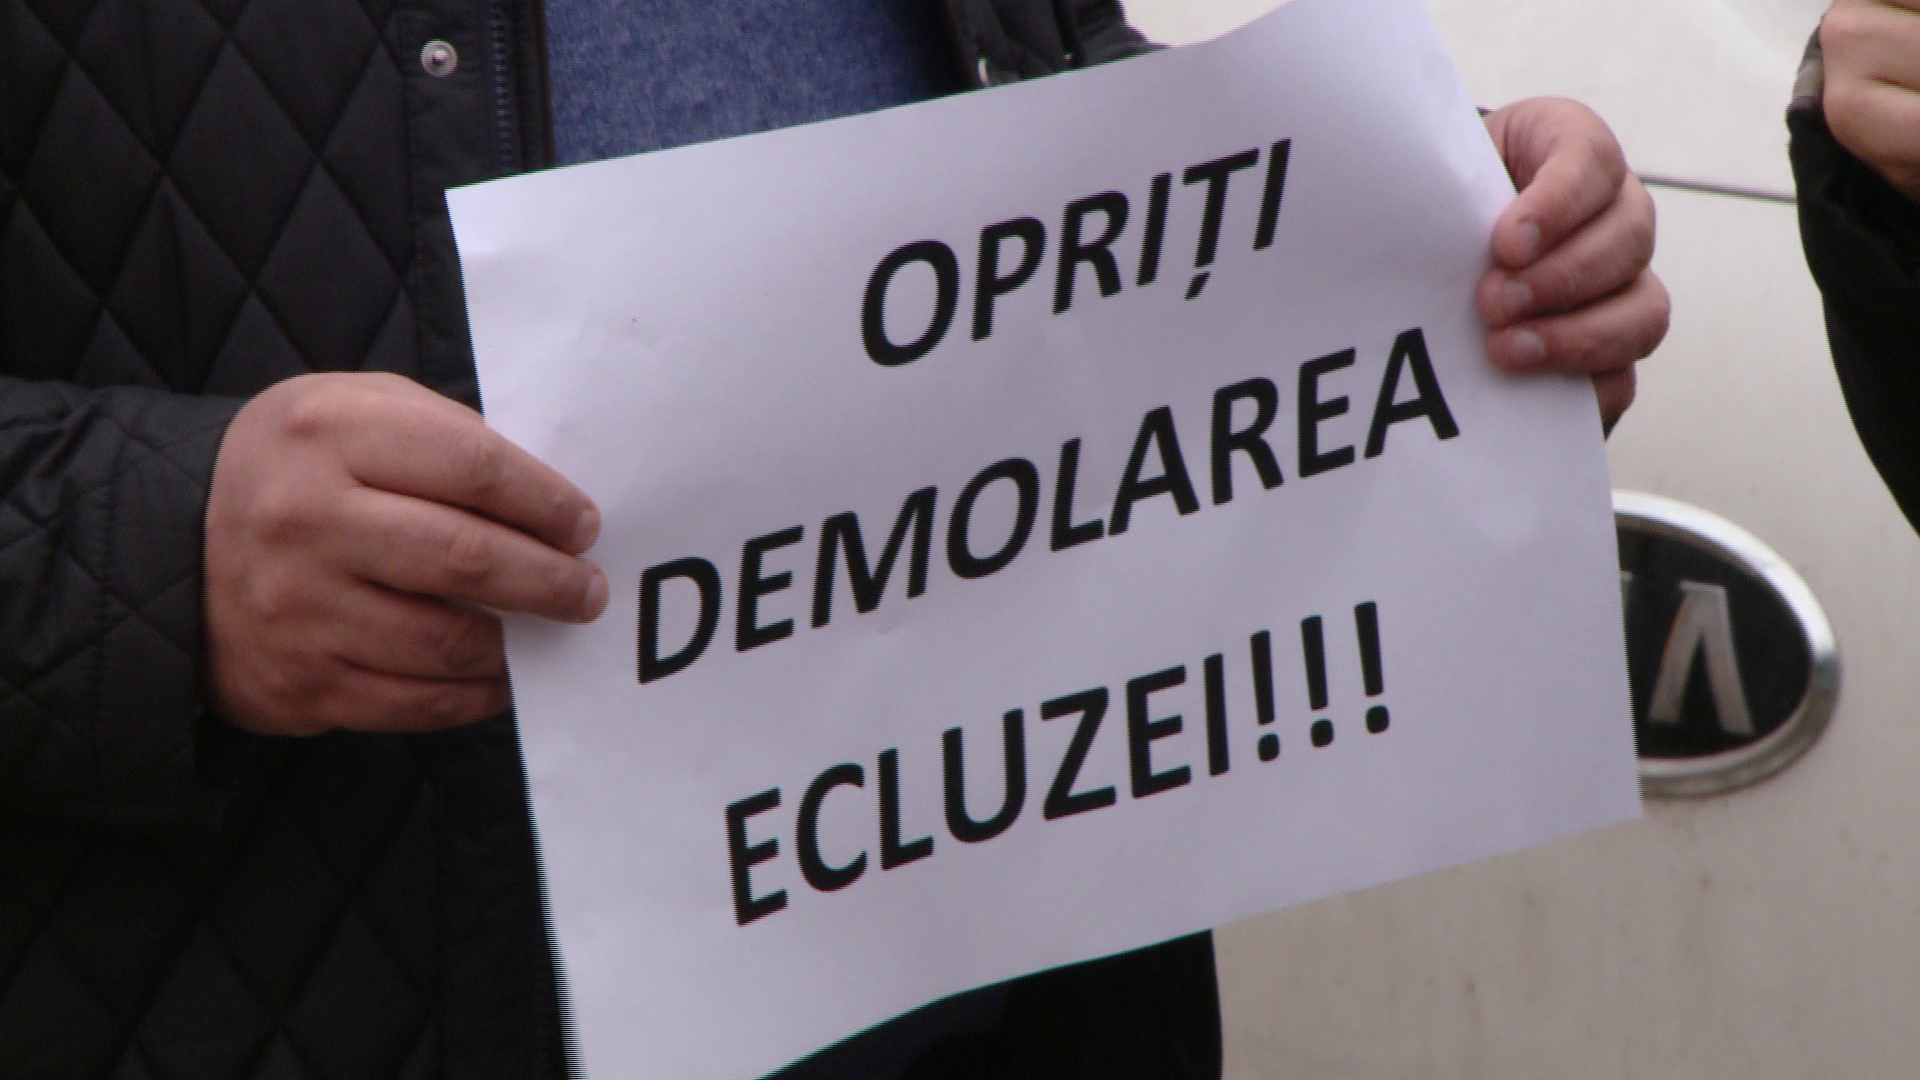 „Opriti demolarea ecluzei!”. Cativa timisoreni au protestat impotriva mutarii stavilarului descoperit in Piata 700. FOTO - Imaginea 1